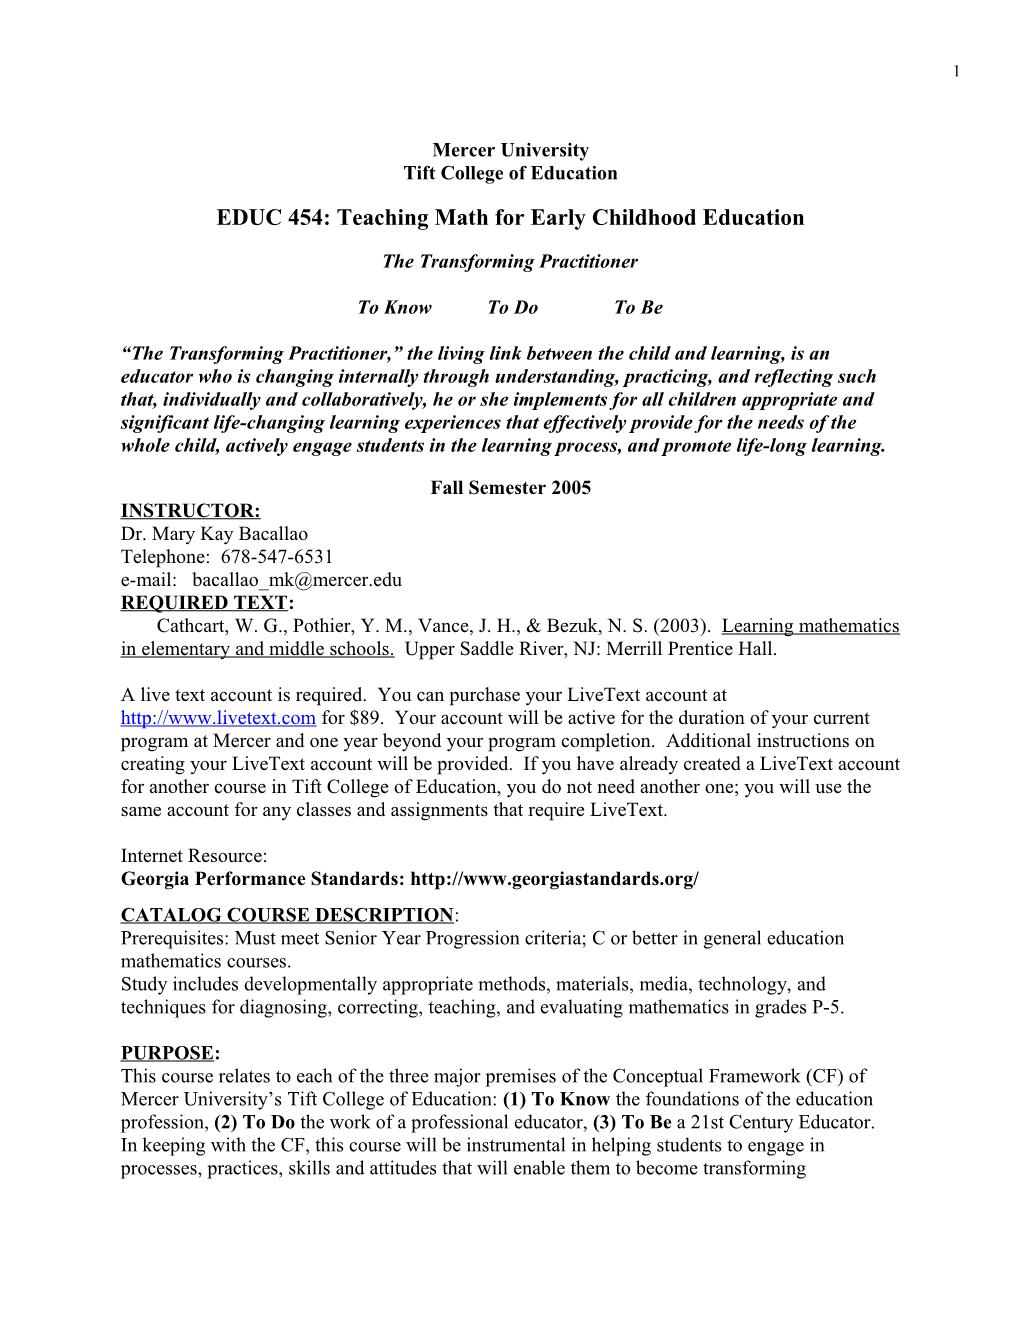 EDUC 454: Teaching Math for Early Childhood Education